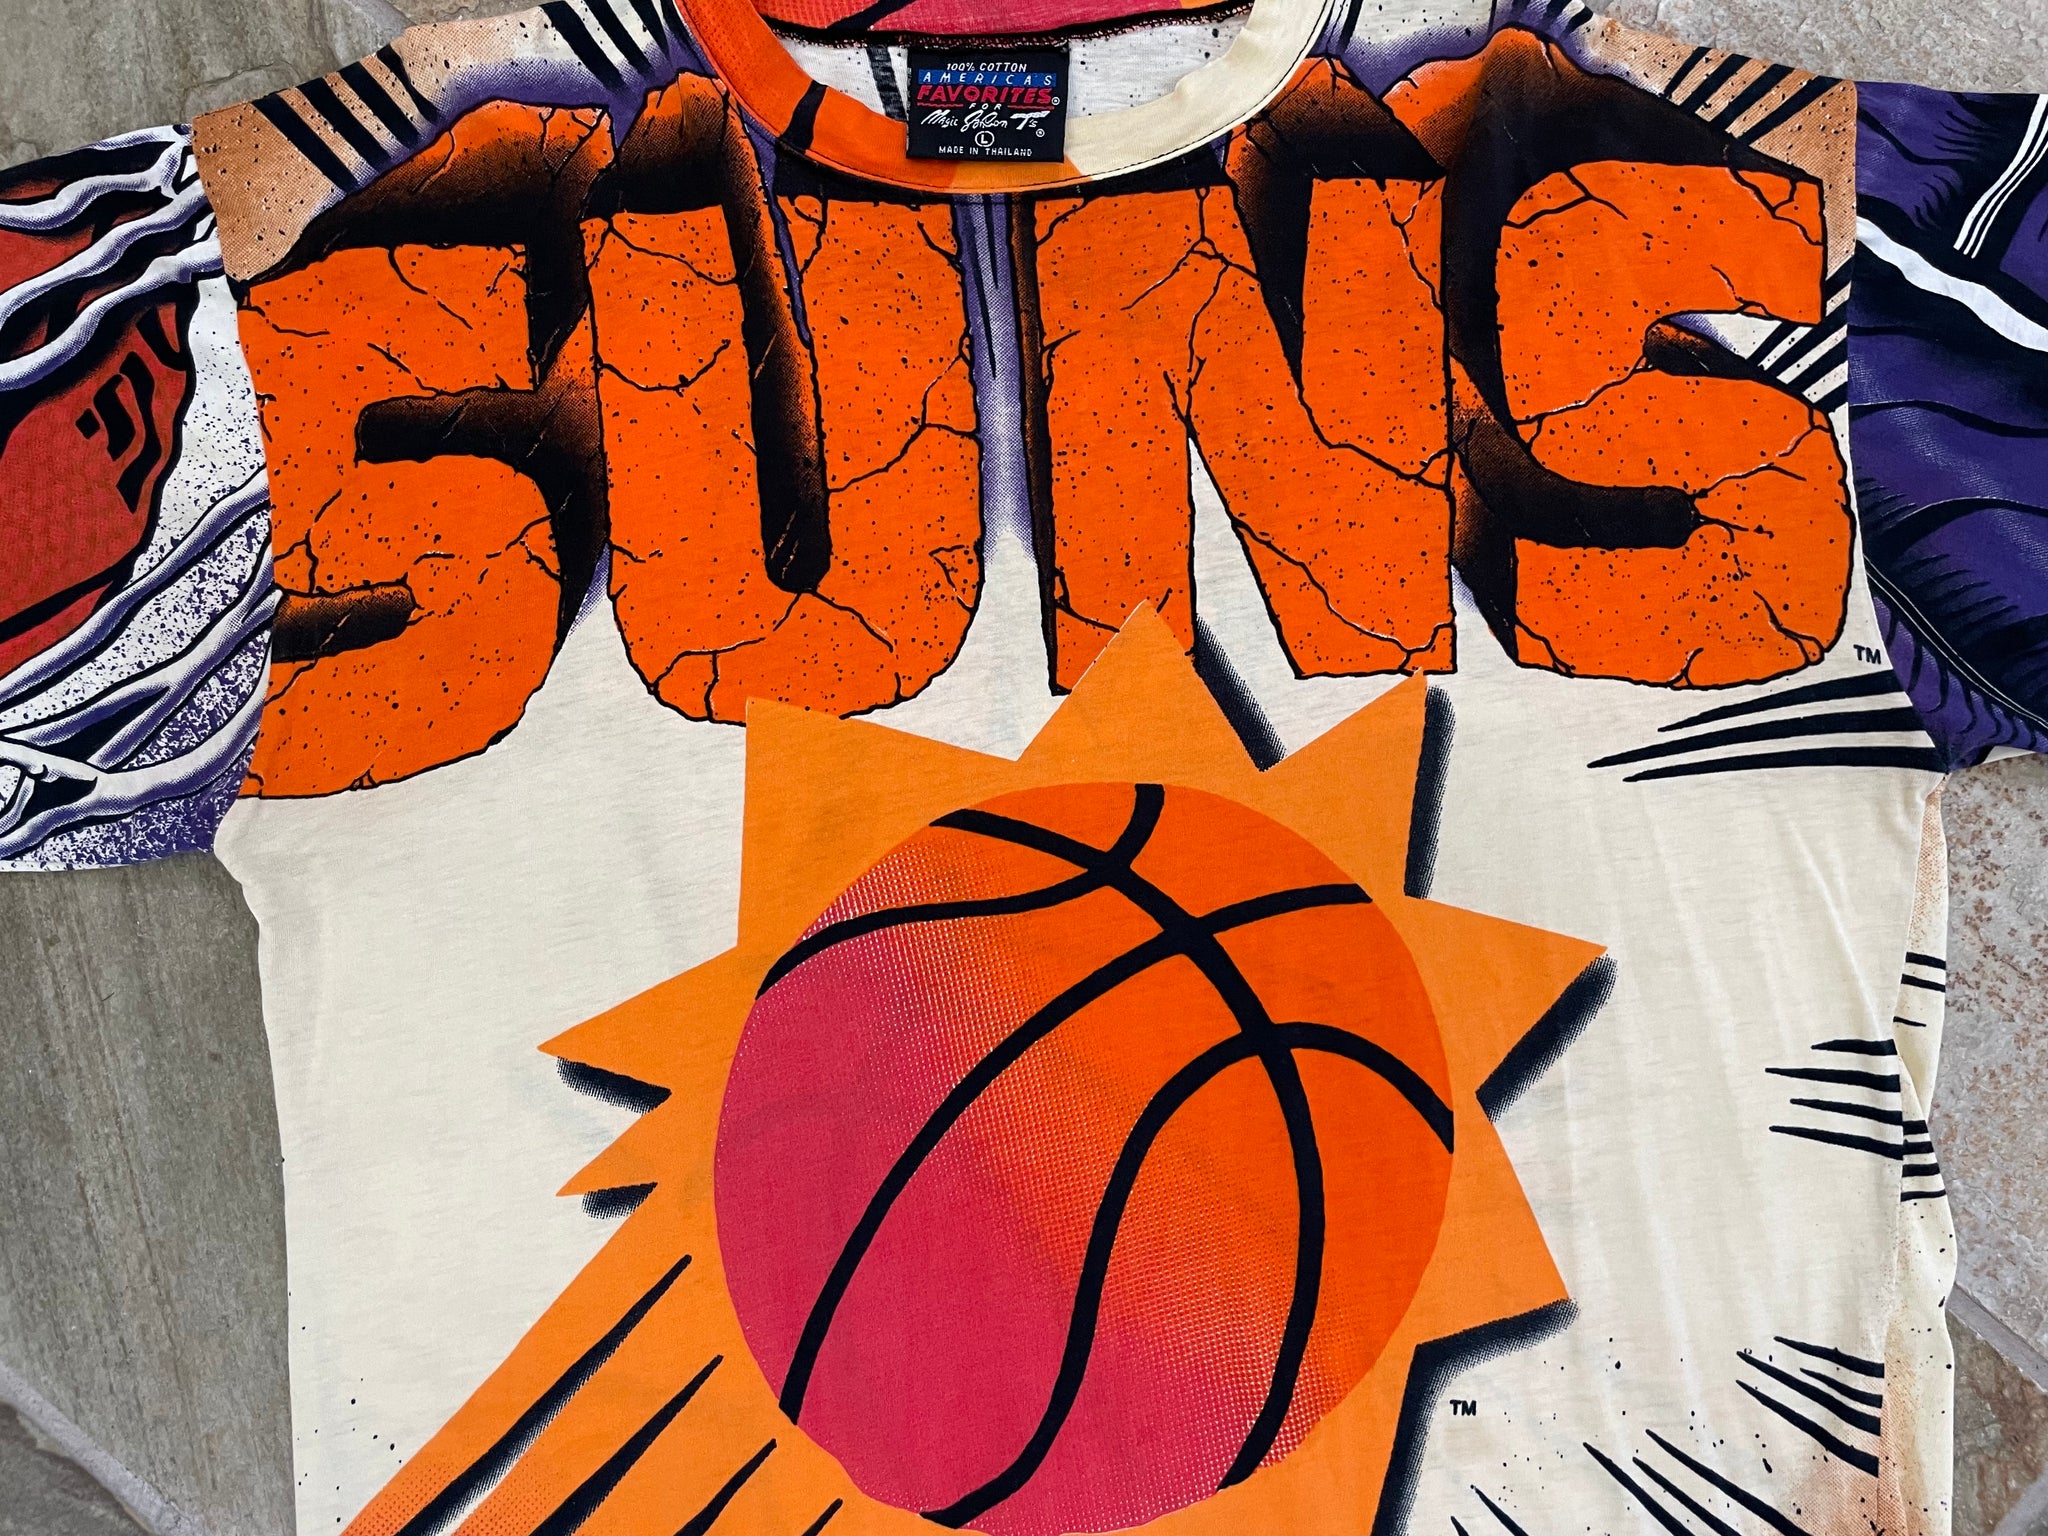 Phoenix Suns NBA License T Shirt